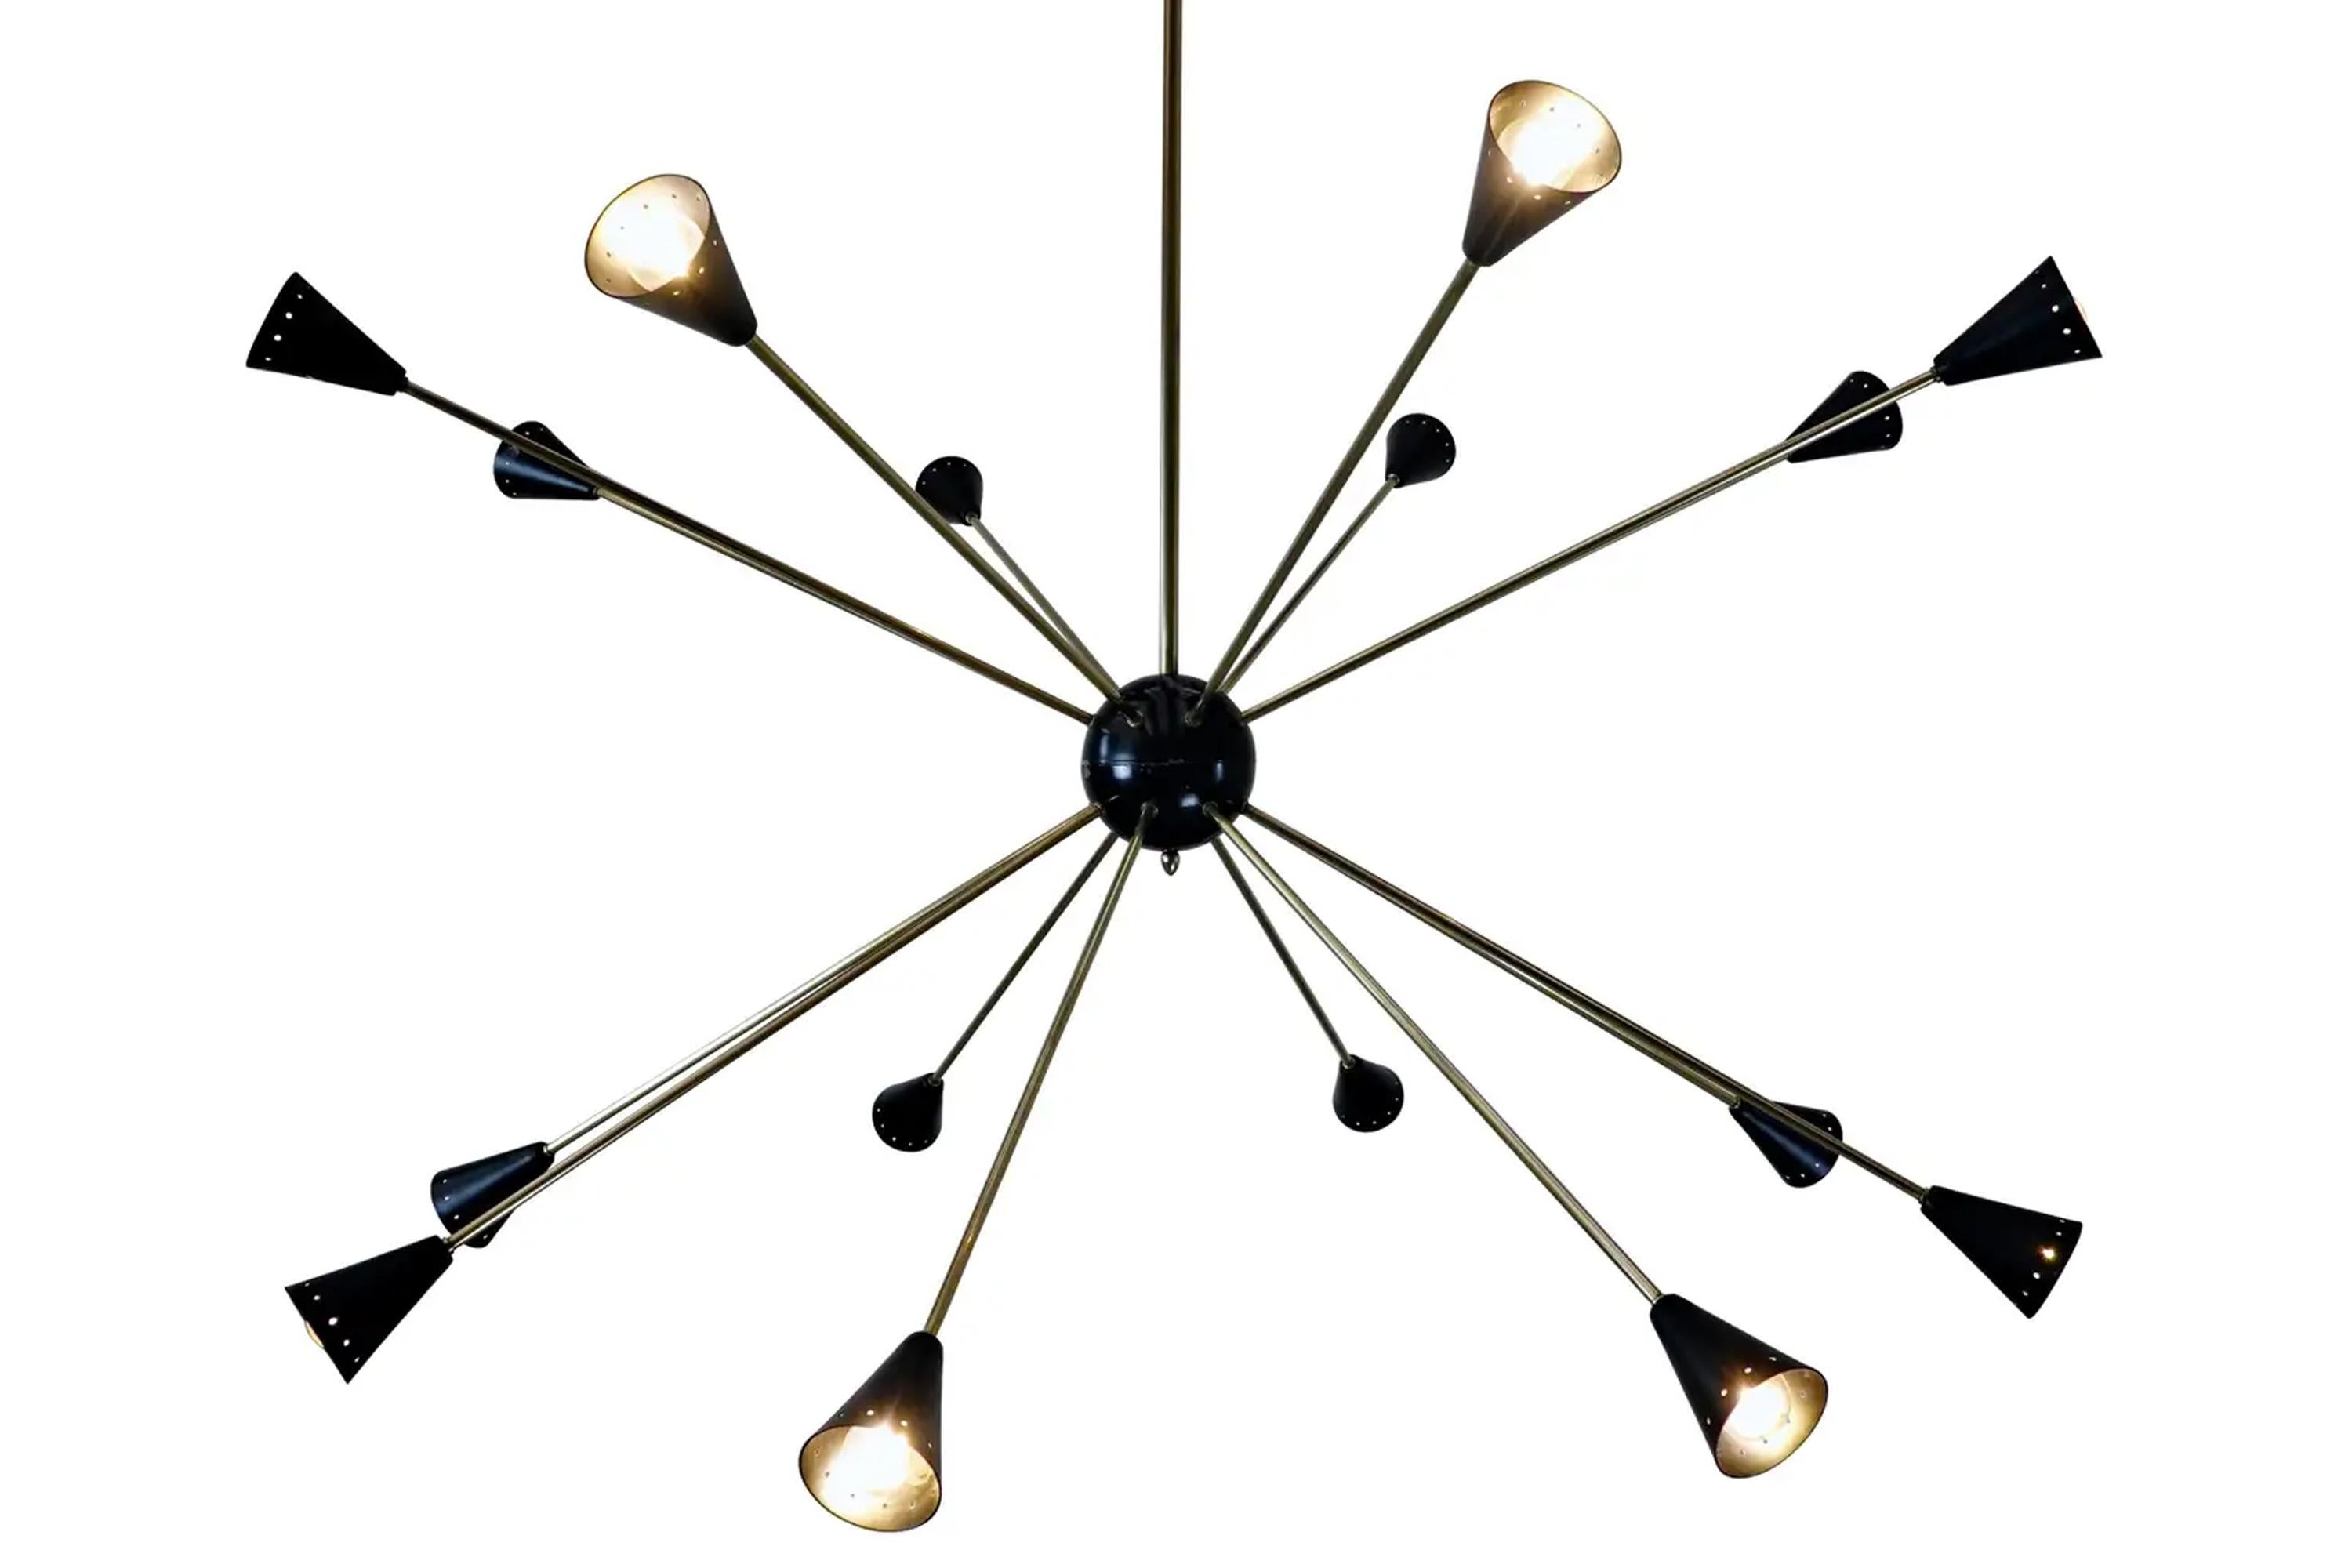 Italian Sputnik Ceiling Light, Brass and Black Enamel 1950s.
 
